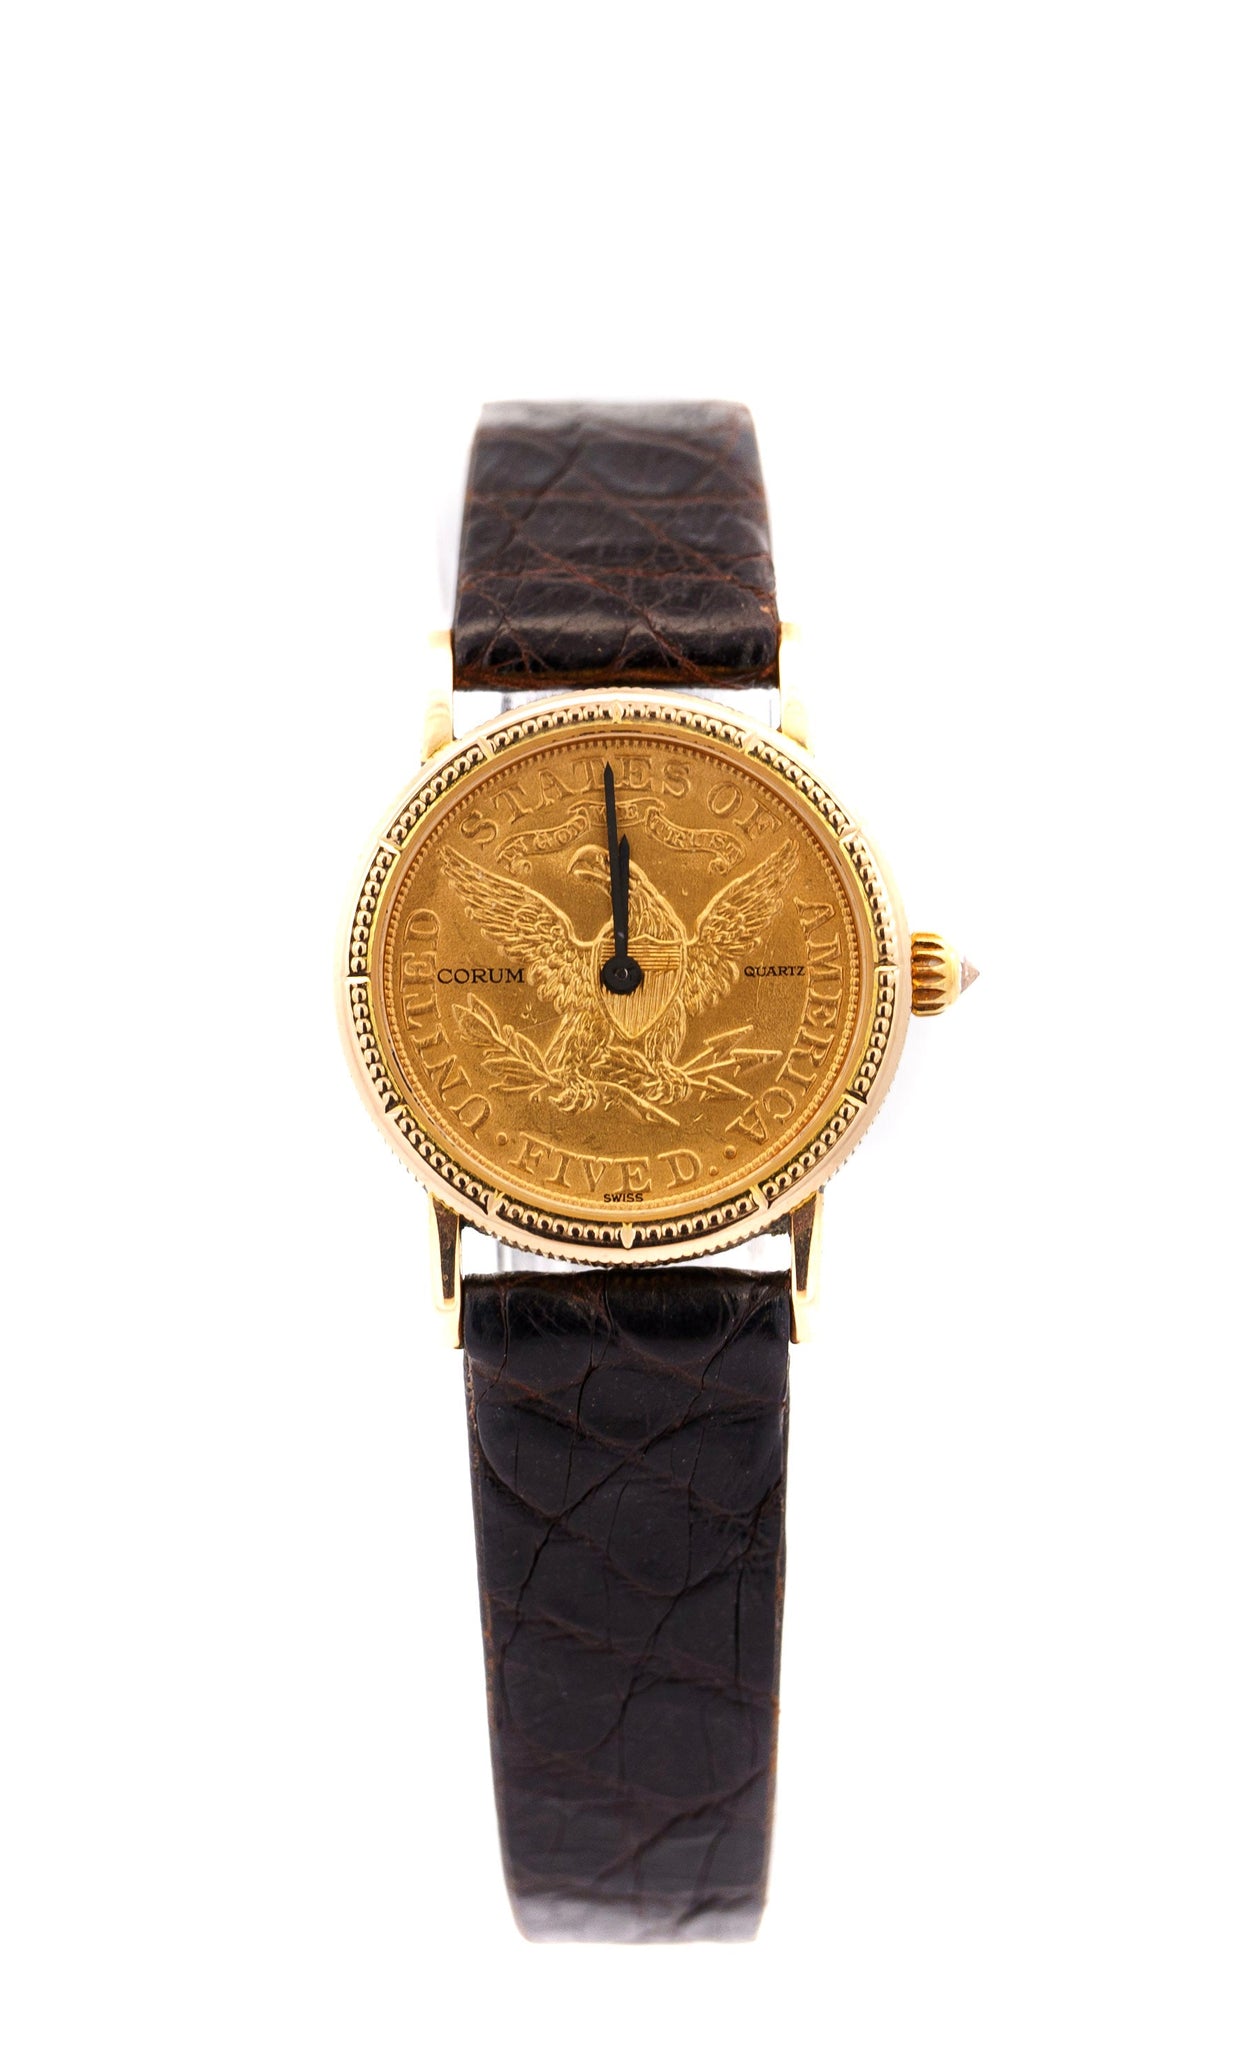 Vintage Corum 1899 5-Dollar USA Gold Coin Watch Face in Original Box with Crocodile Strap